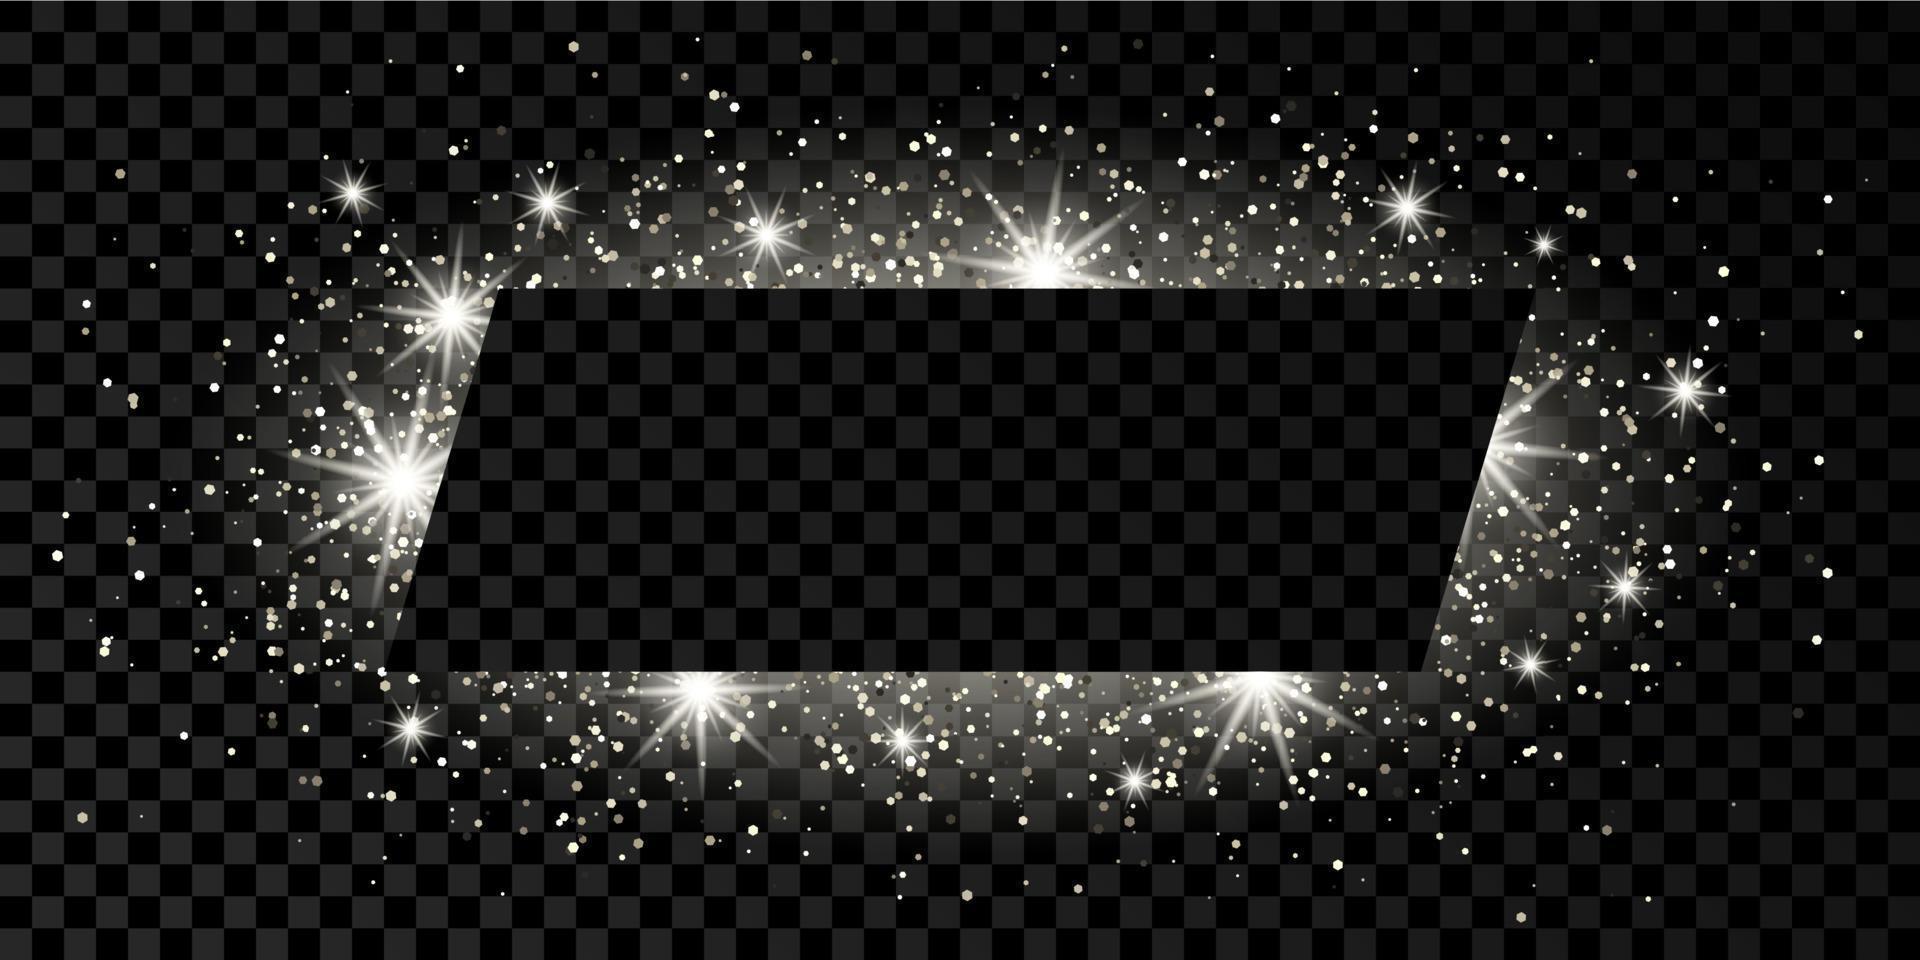 marco rectangular plateado con brillo, destellos y bengalas sobre fondo transparente oscuro. telón de fondo de lujo vacío. ilustración vectorial vector